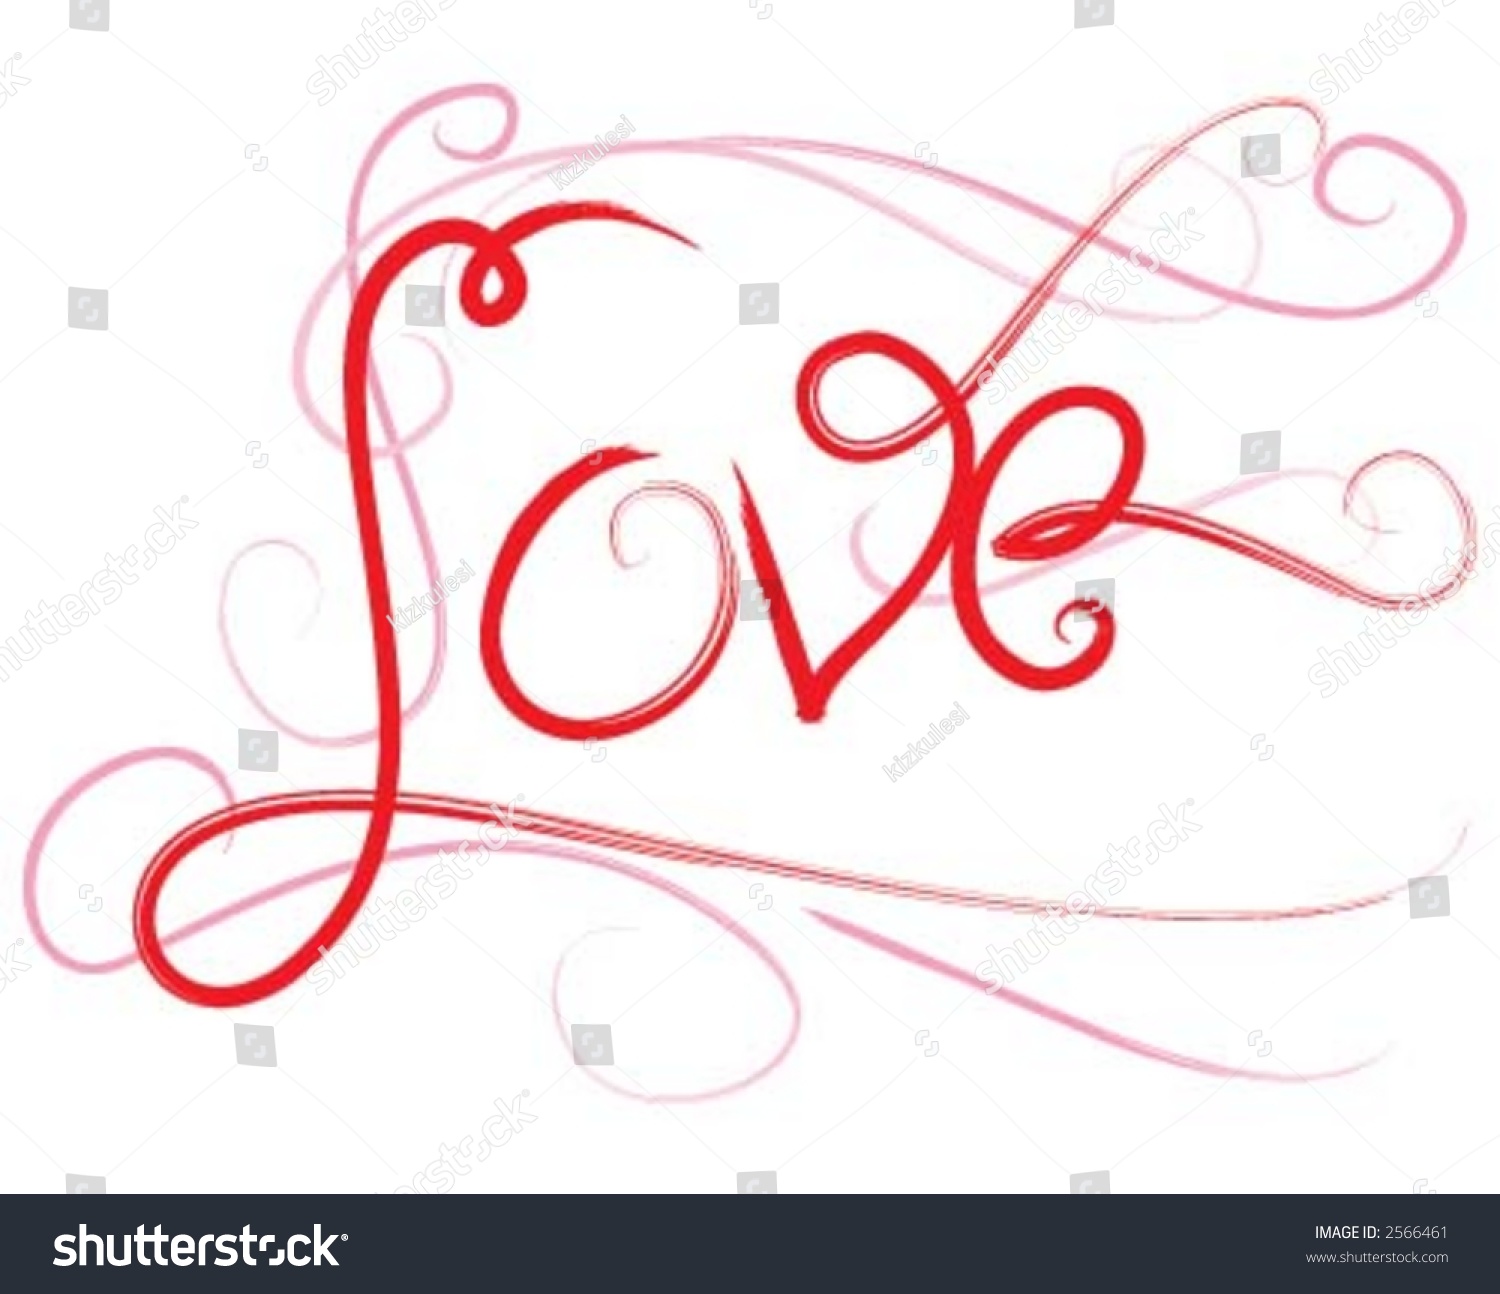 Love Word Painting incredible xcitefun